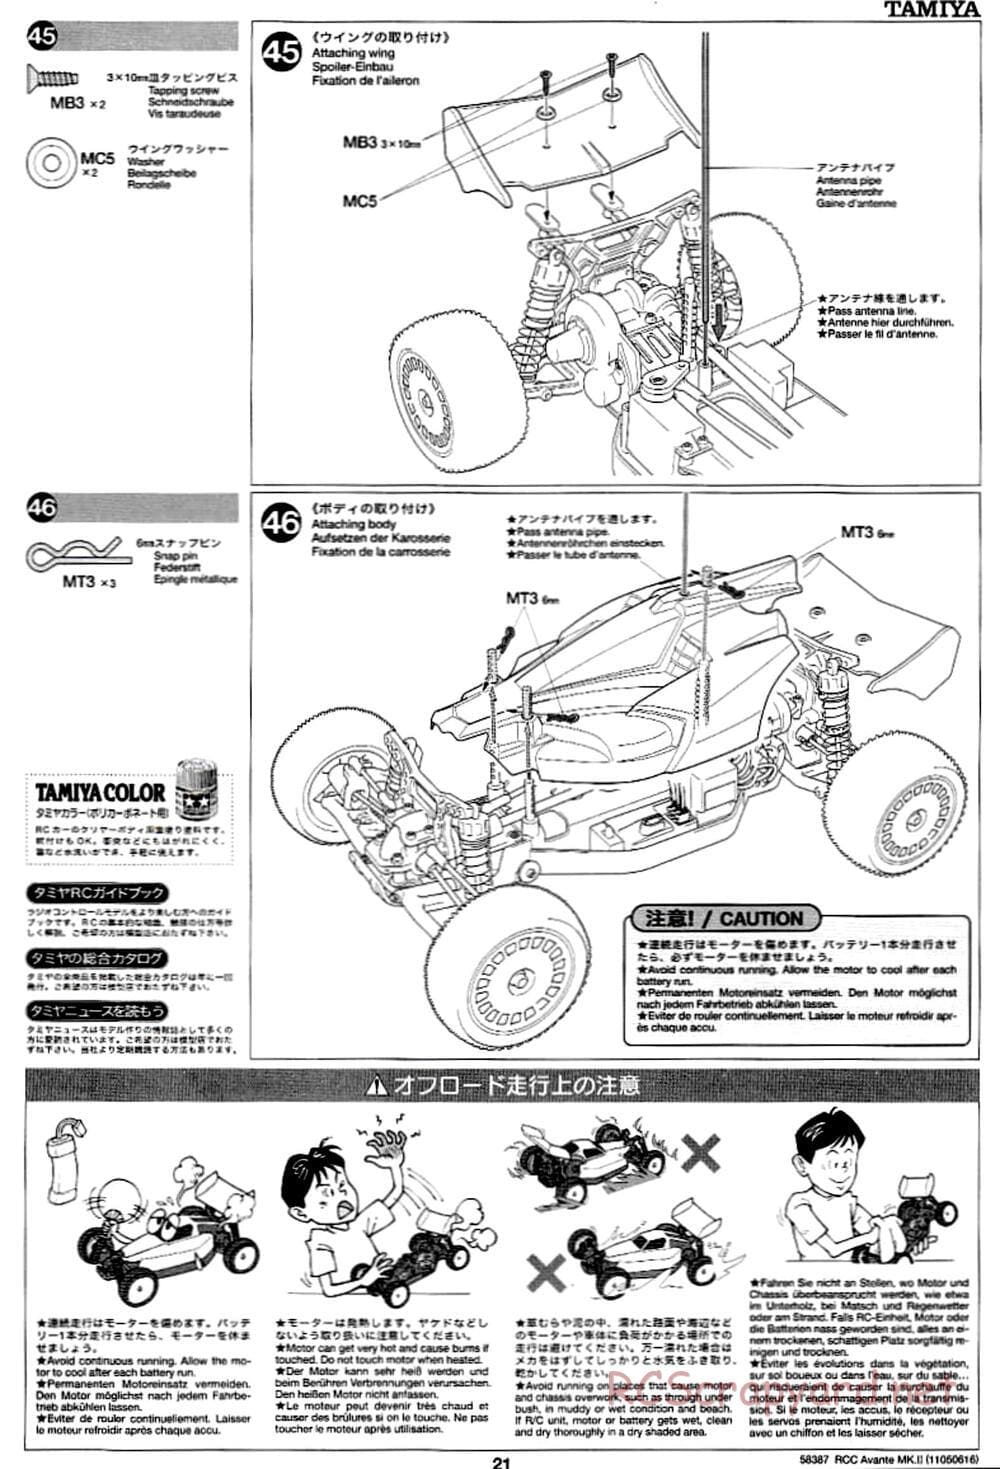 Tamiya - Avante Mk.II Chassis - Manual - Page 21